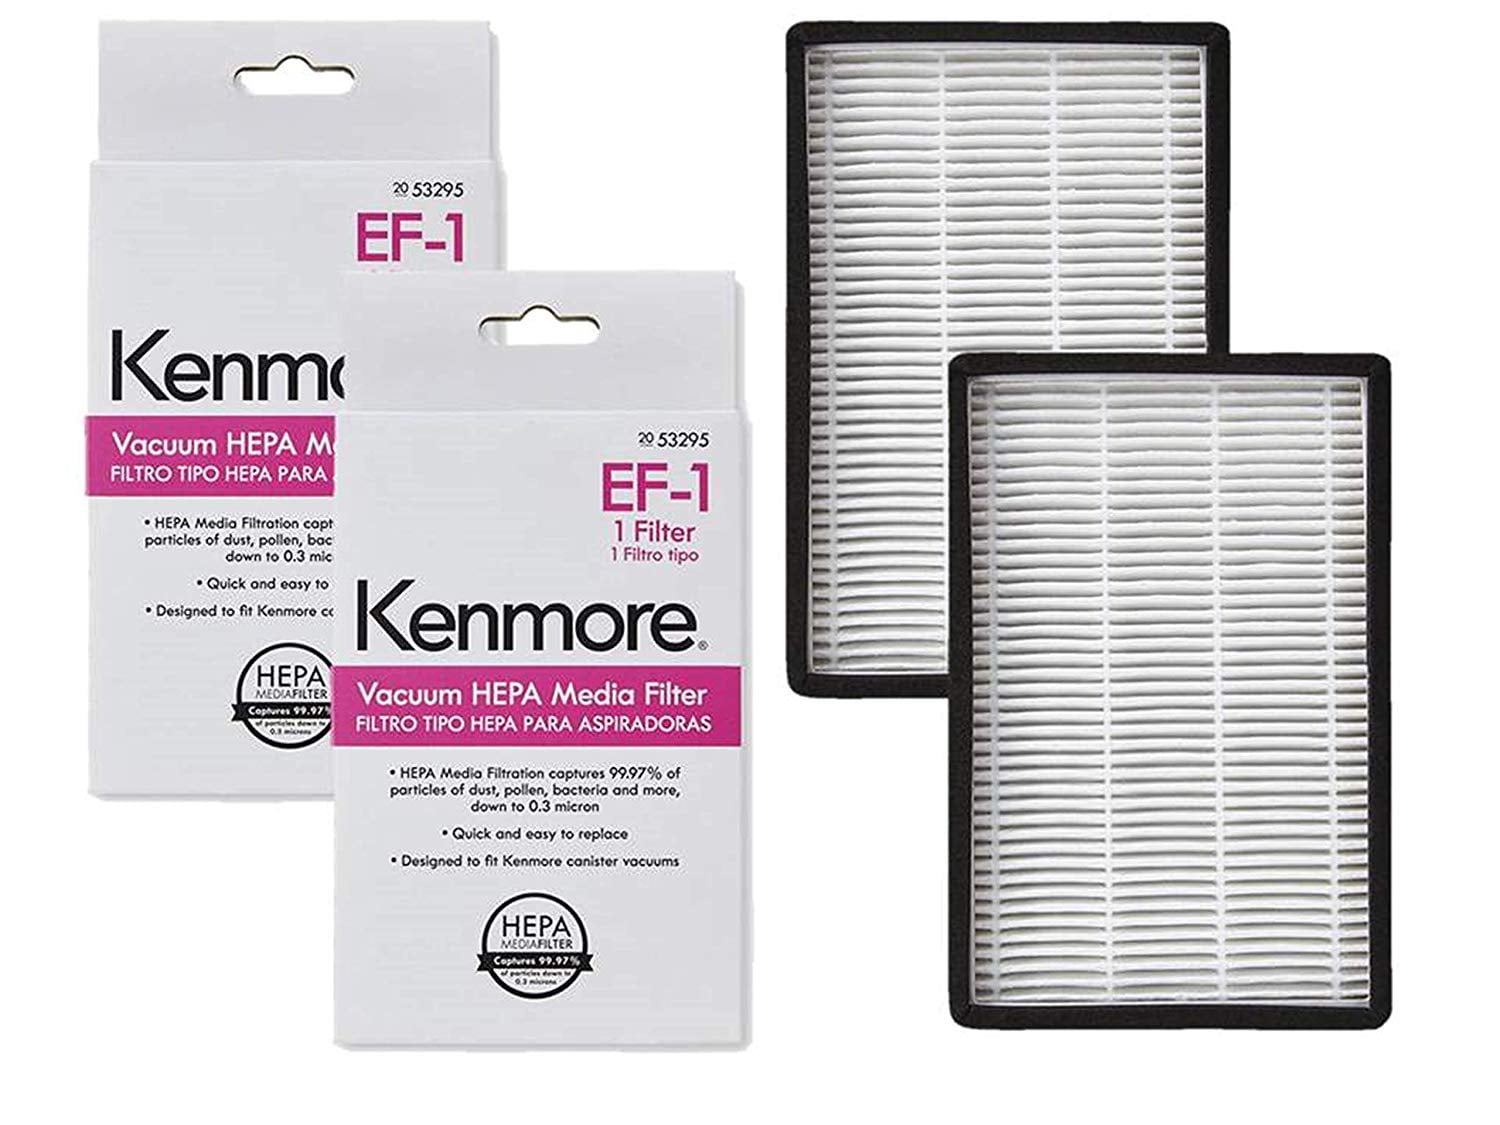 02053295000P---2 PACK Sears Kenmore EF-1 Filter Fits Models 20-8688920-40324 